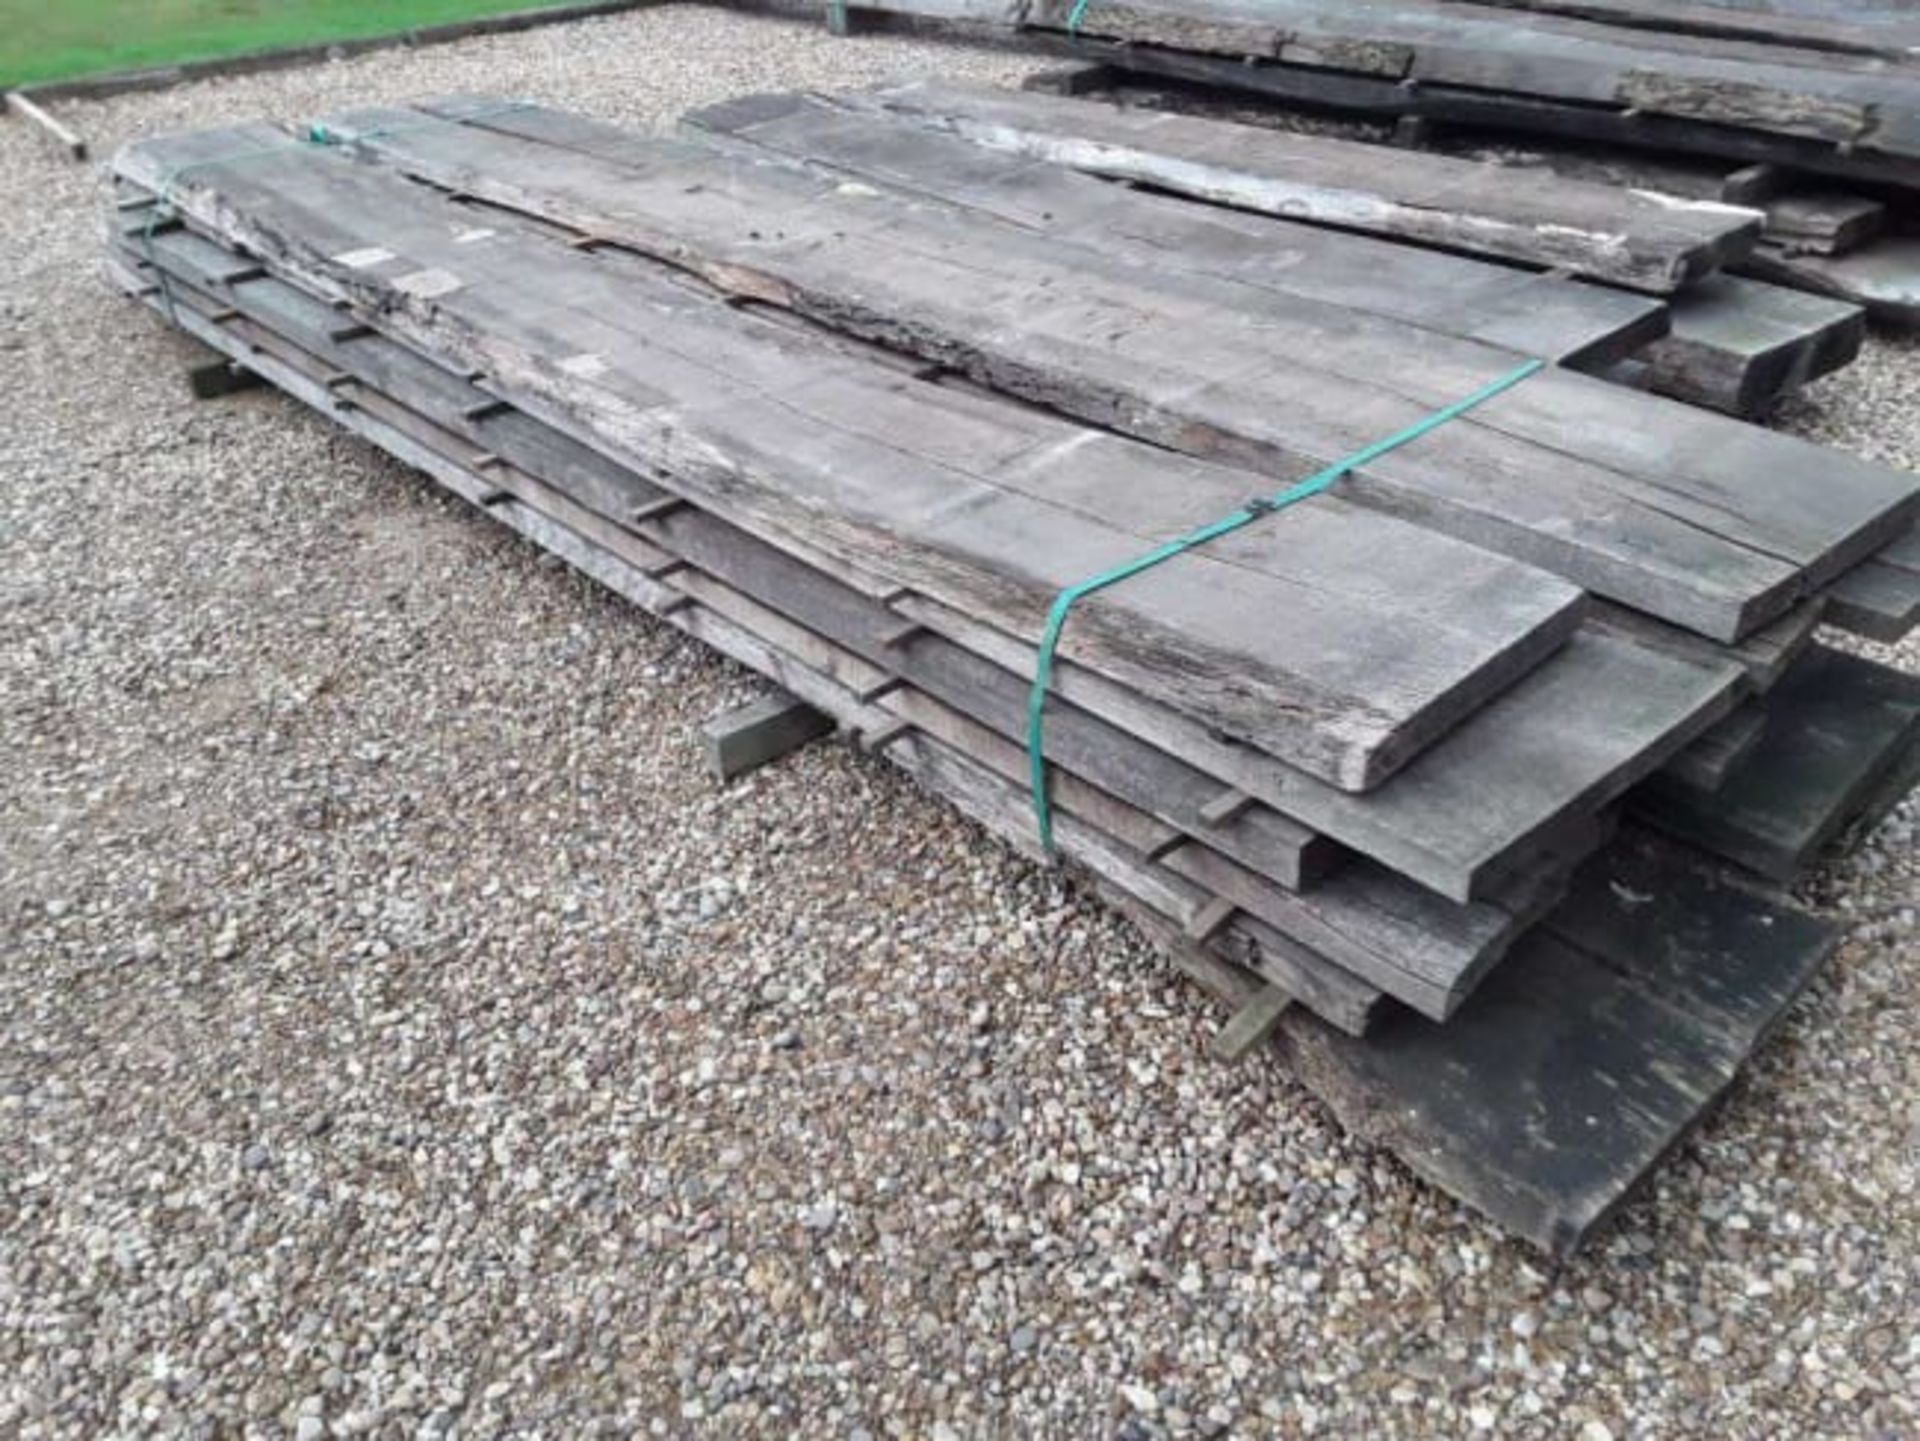 18 x Hardwood Timber Air Dried Waney Edge / Live Edge English Oak Slabs / Boards - Image 3 of 4